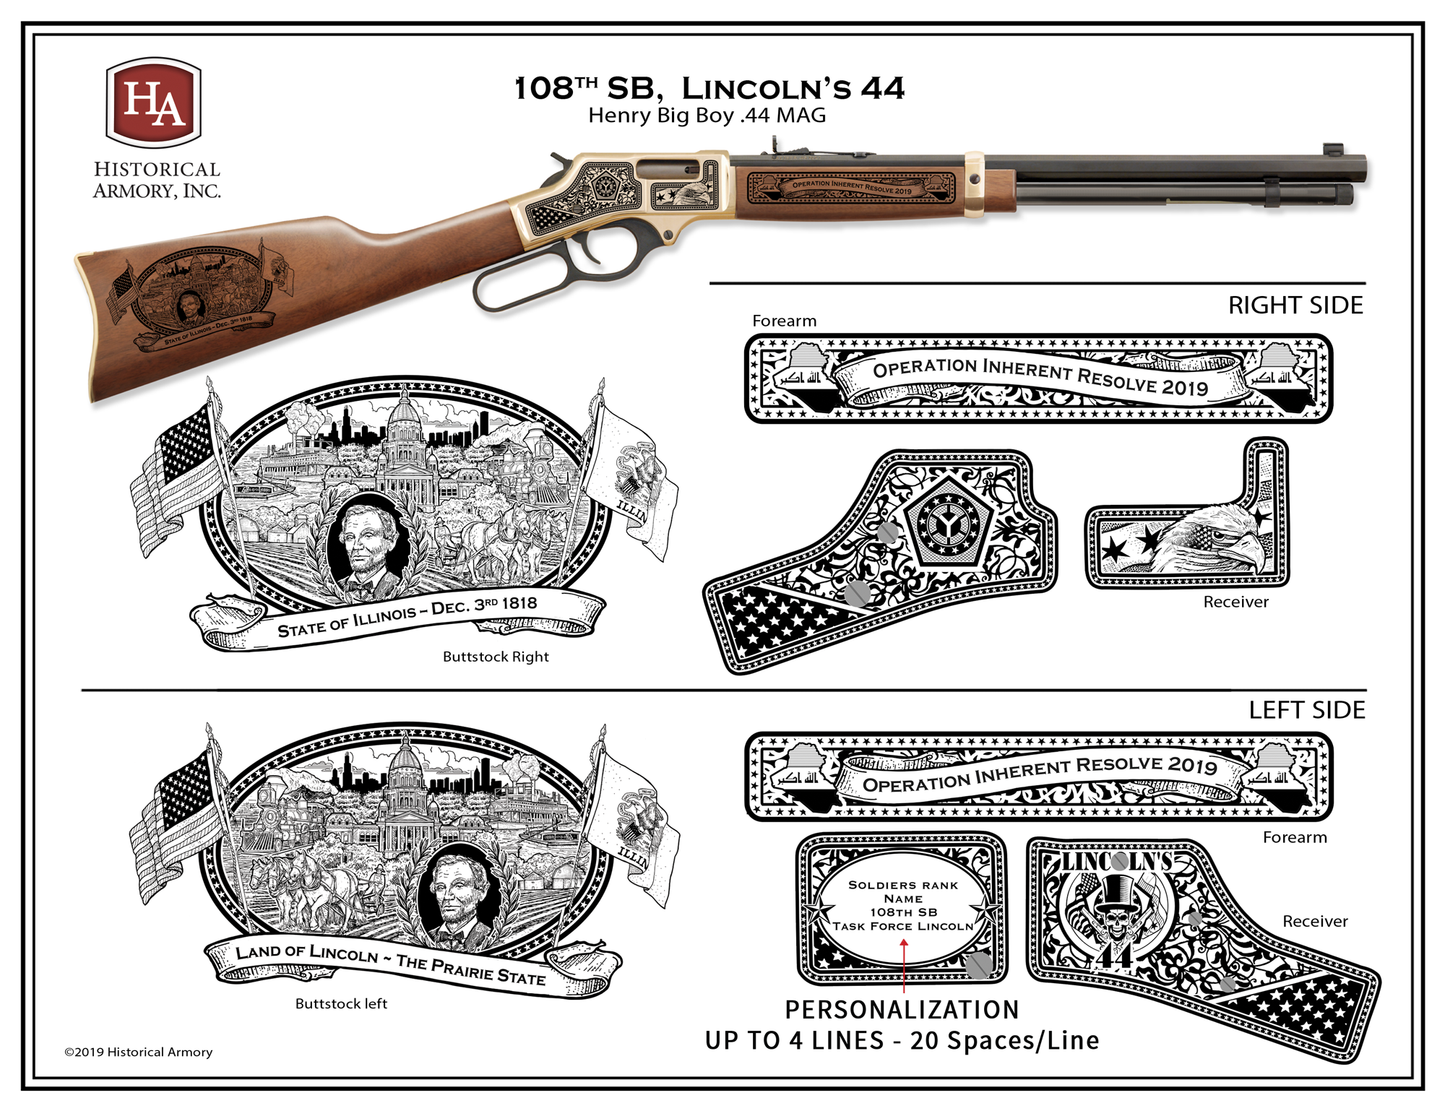 108th SB, Lincoln's 44 Edition